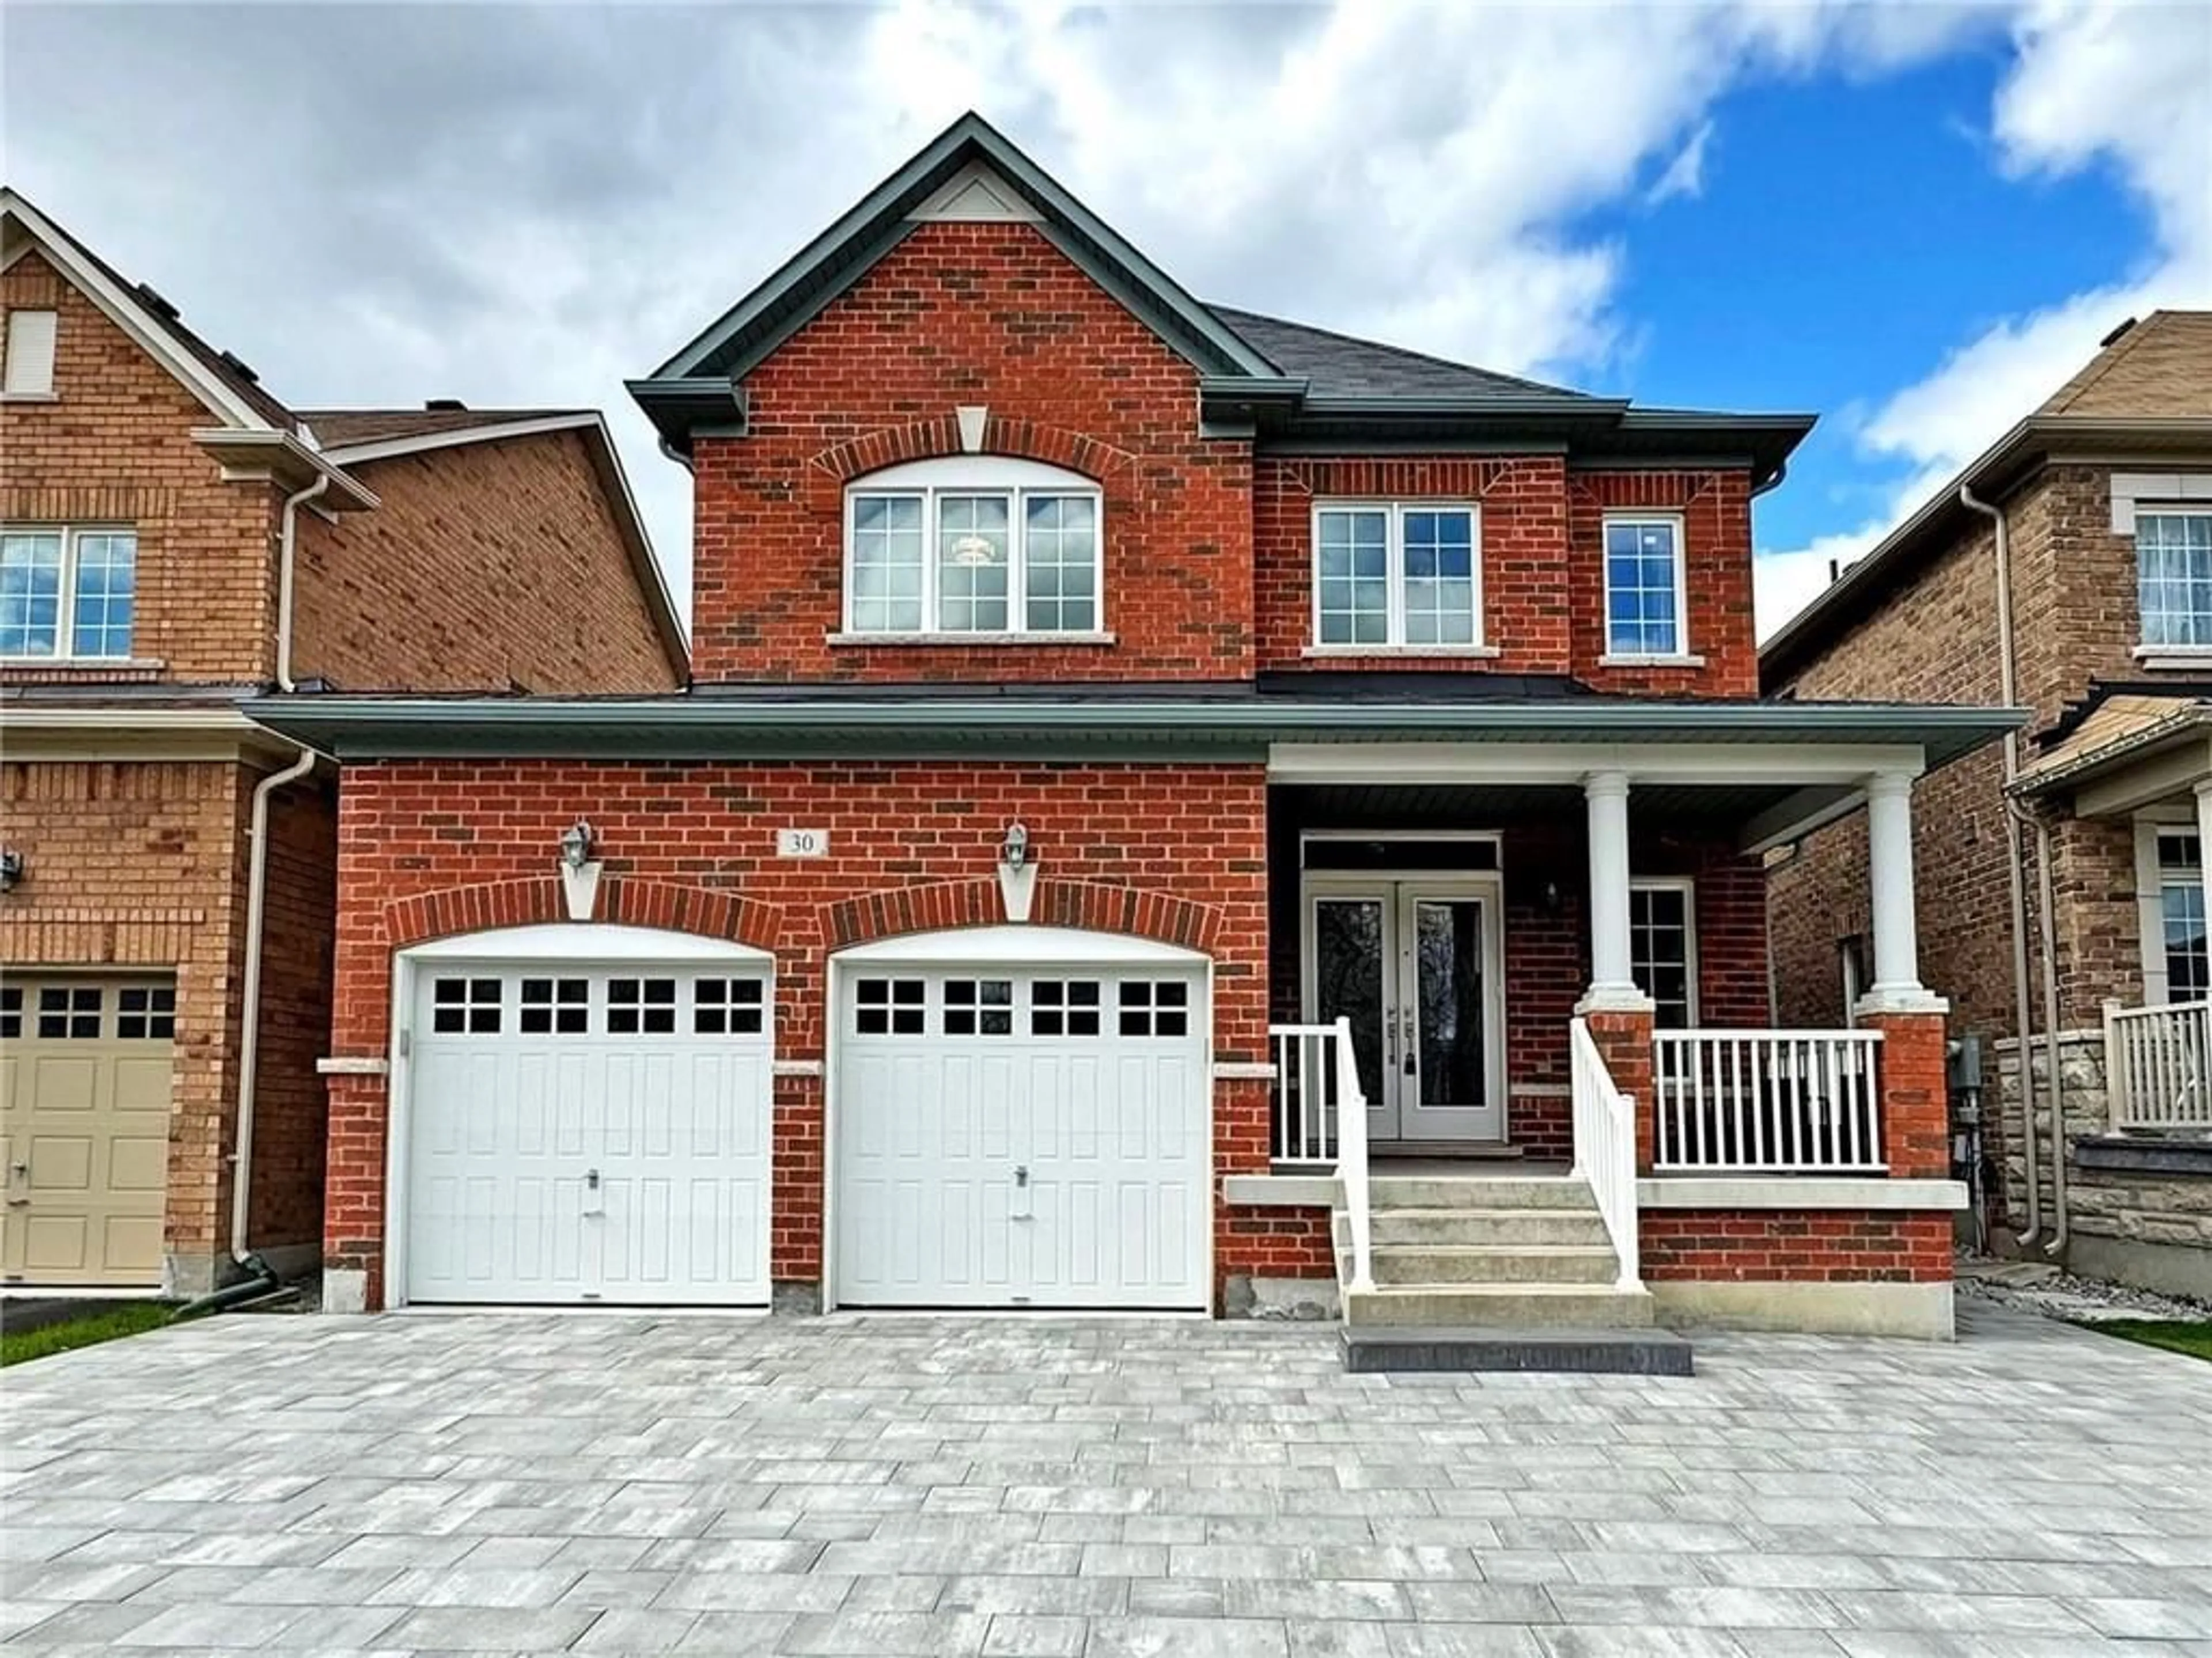 Home with brick exterior material for 30 Bush Ridges Ave, Jefferson Ontario L4E 0P1